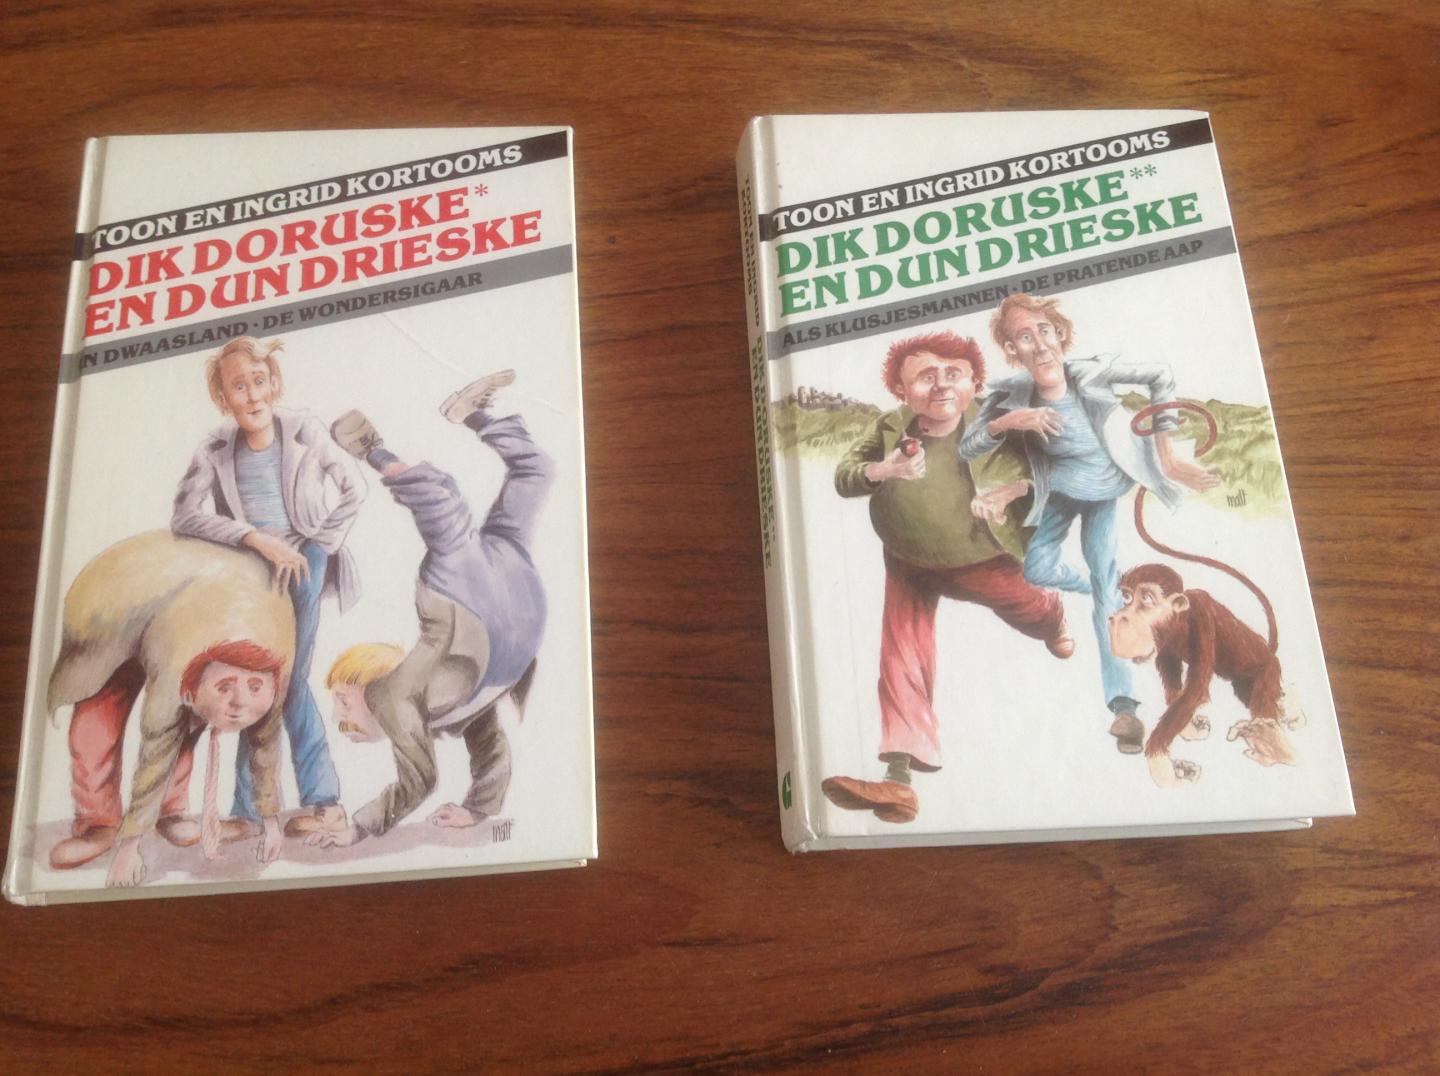 Kortooms, Toon en Ingrid Titel: - Dik Doruske en dun Drieske 1) In dwaasland-De wondersigaar 2) Als klusjesman-De pratende aap